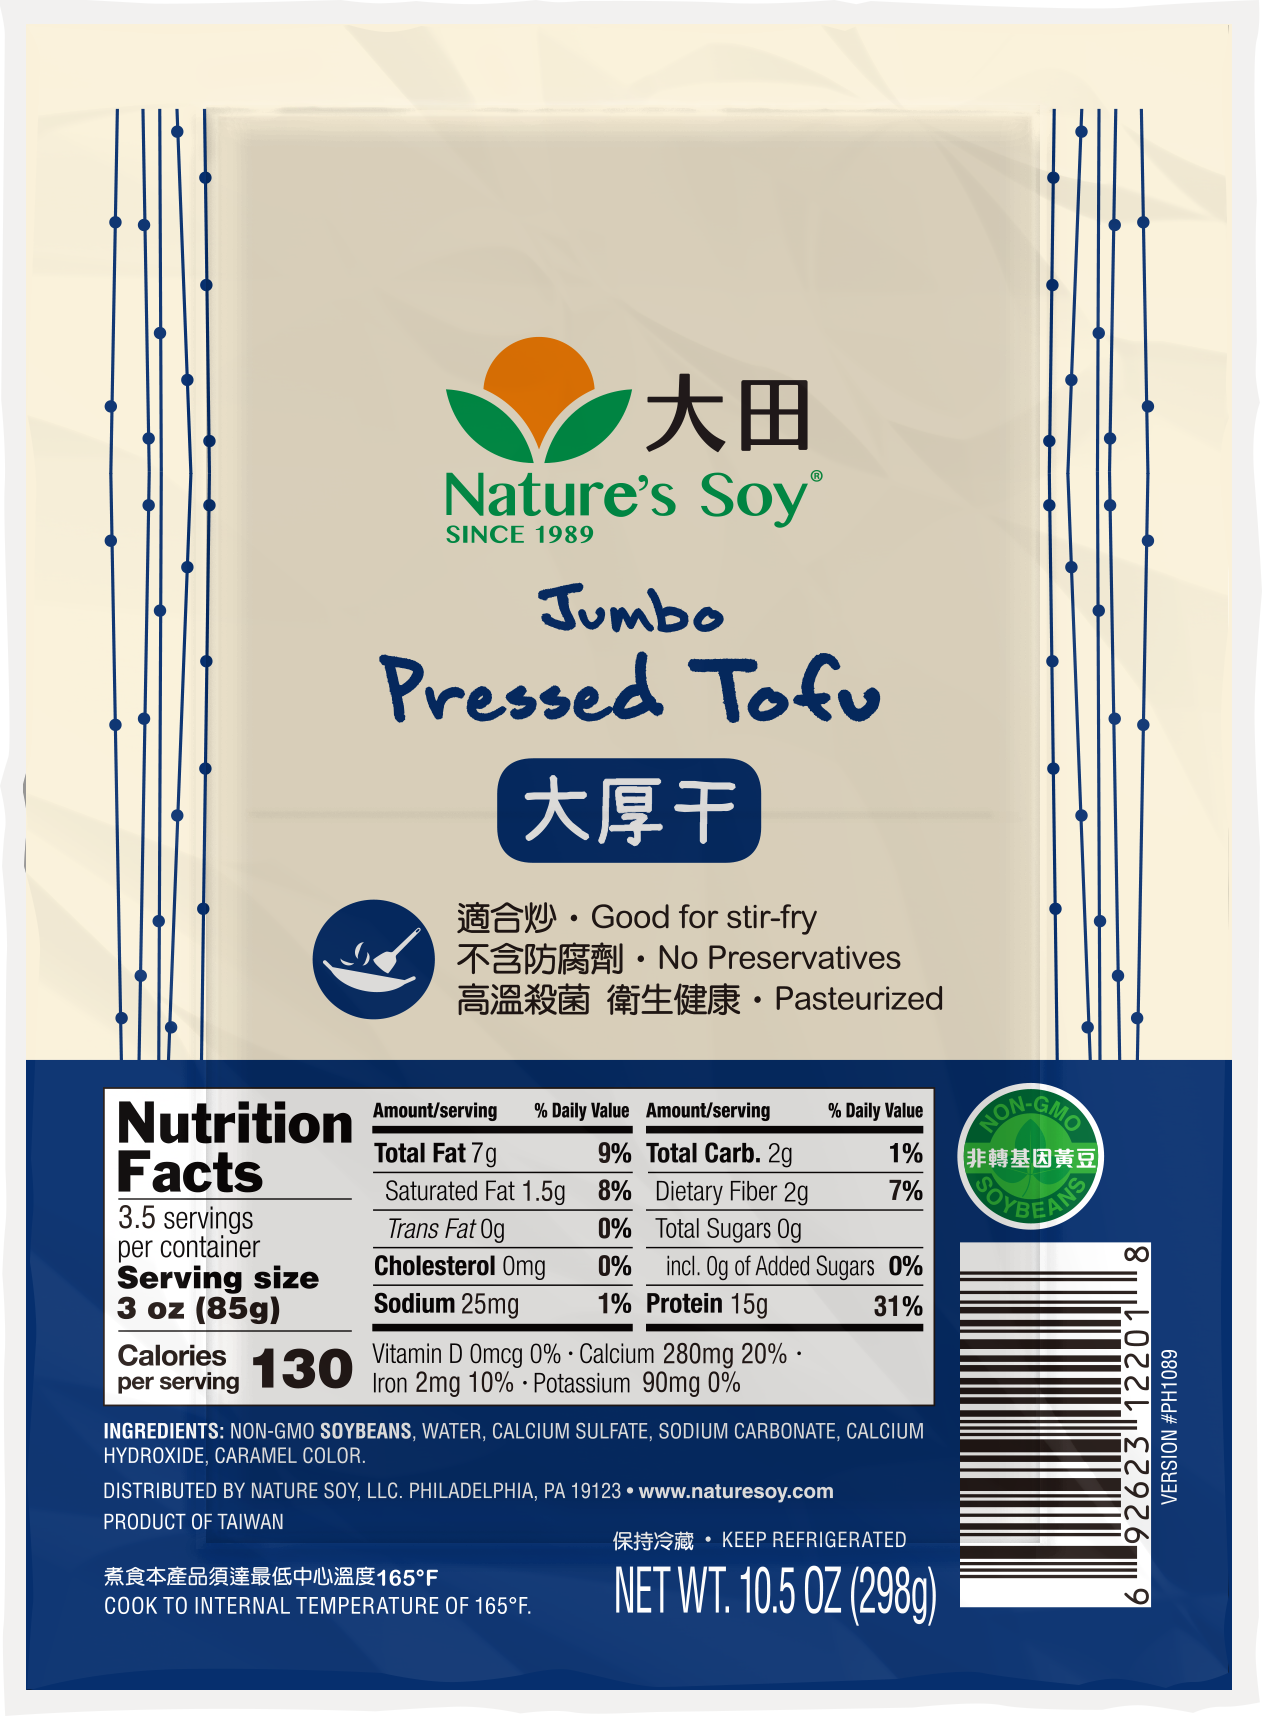 2019-11-07 - Jumbo Pressed Tofu Rendering (1).png